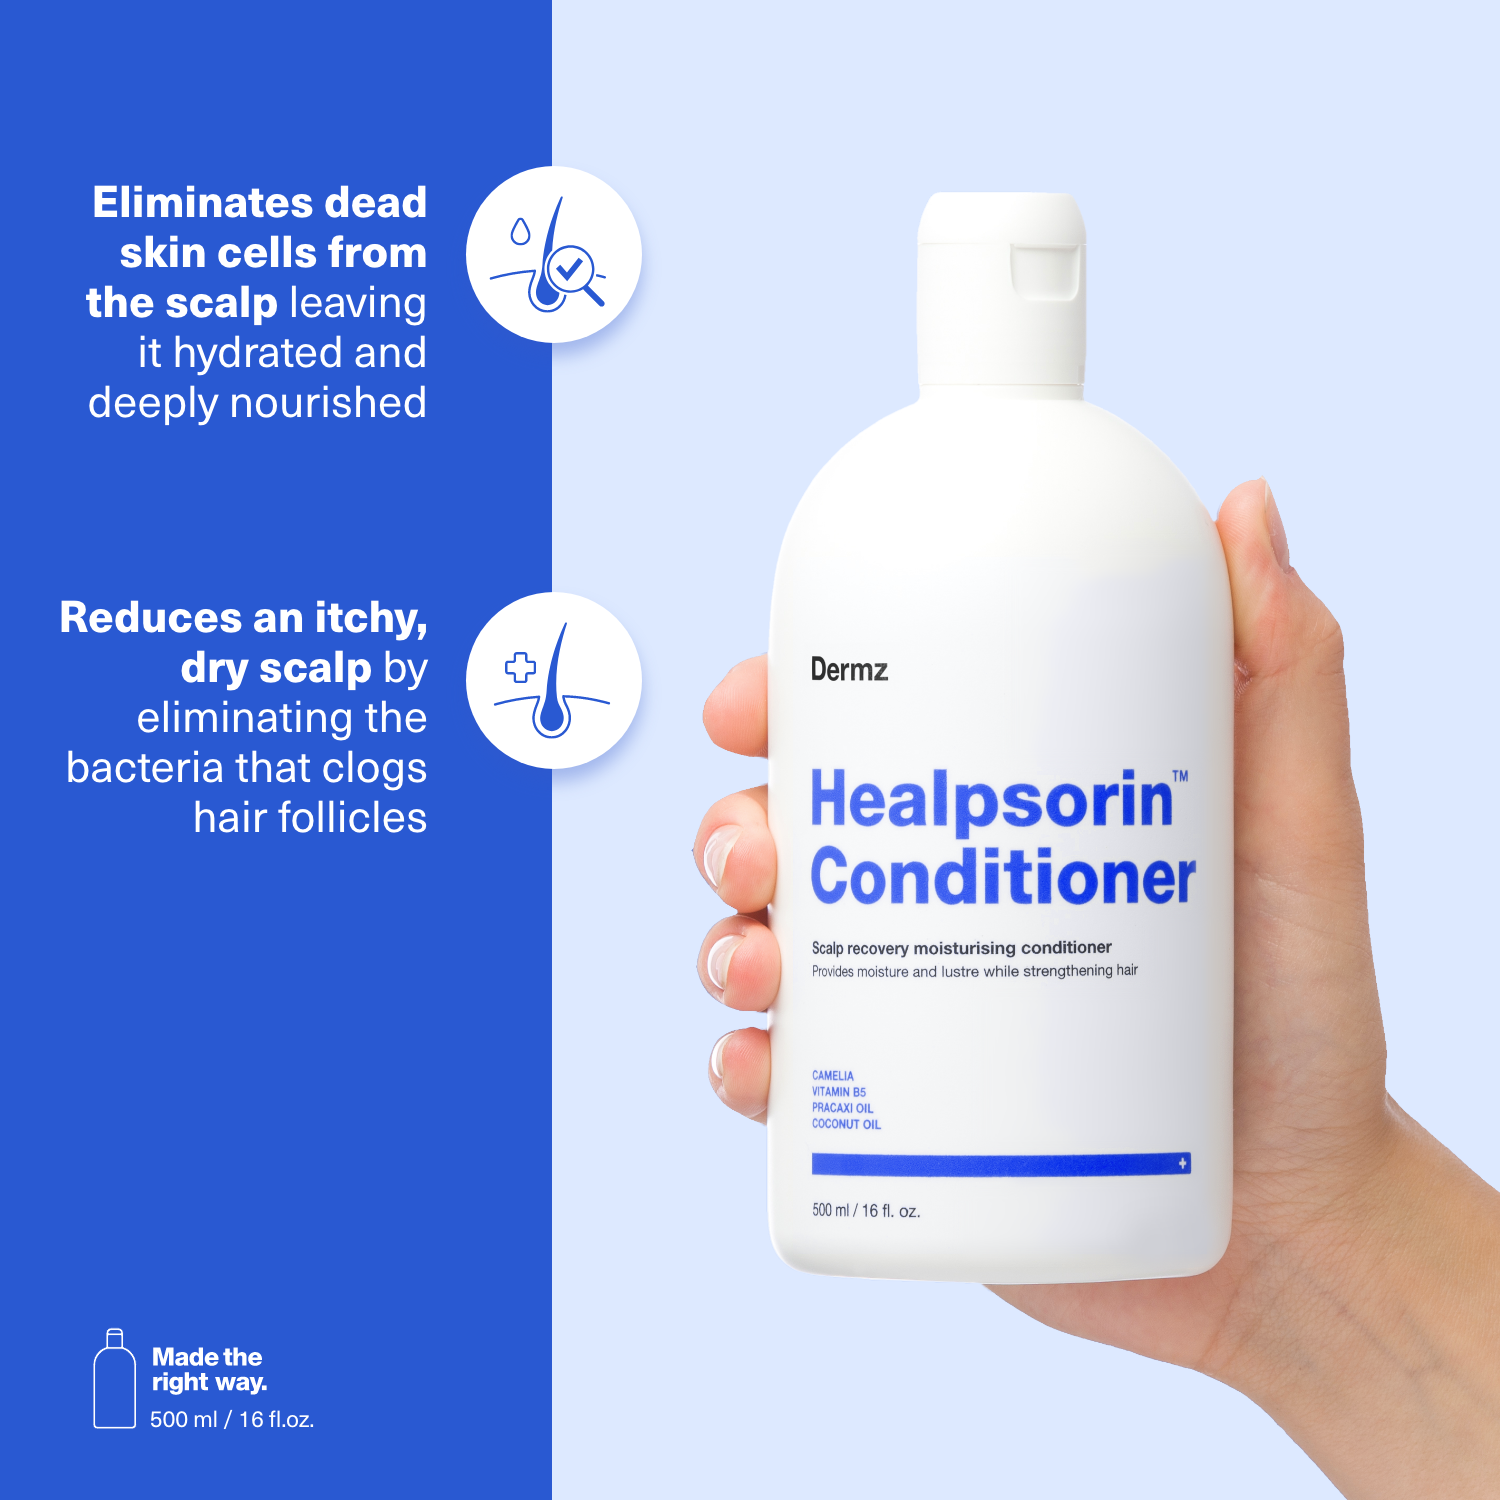 Healpsorin Conditioner